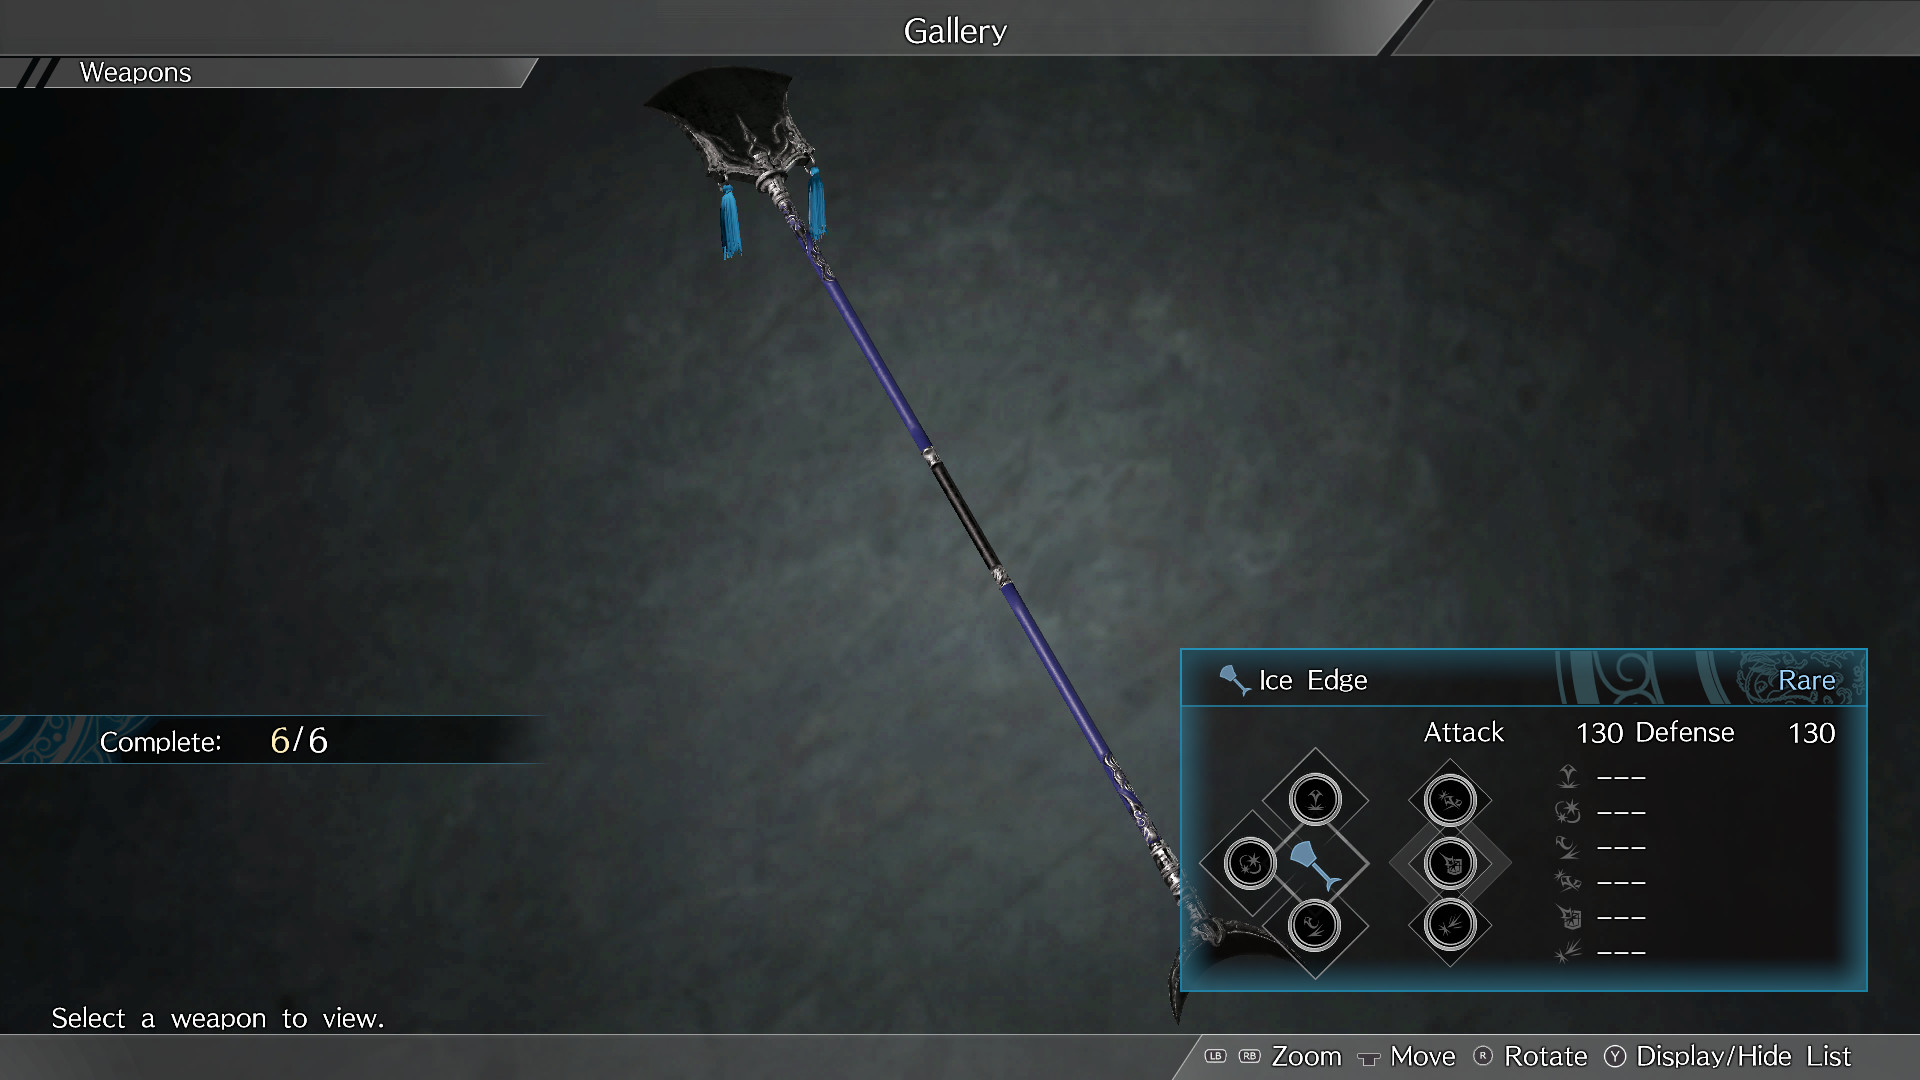 DYNASTY WARRIORS 9: Additional Weapon "Crescent Edge" / 追加武器「月牙鏟」 Featured Screenshot #1